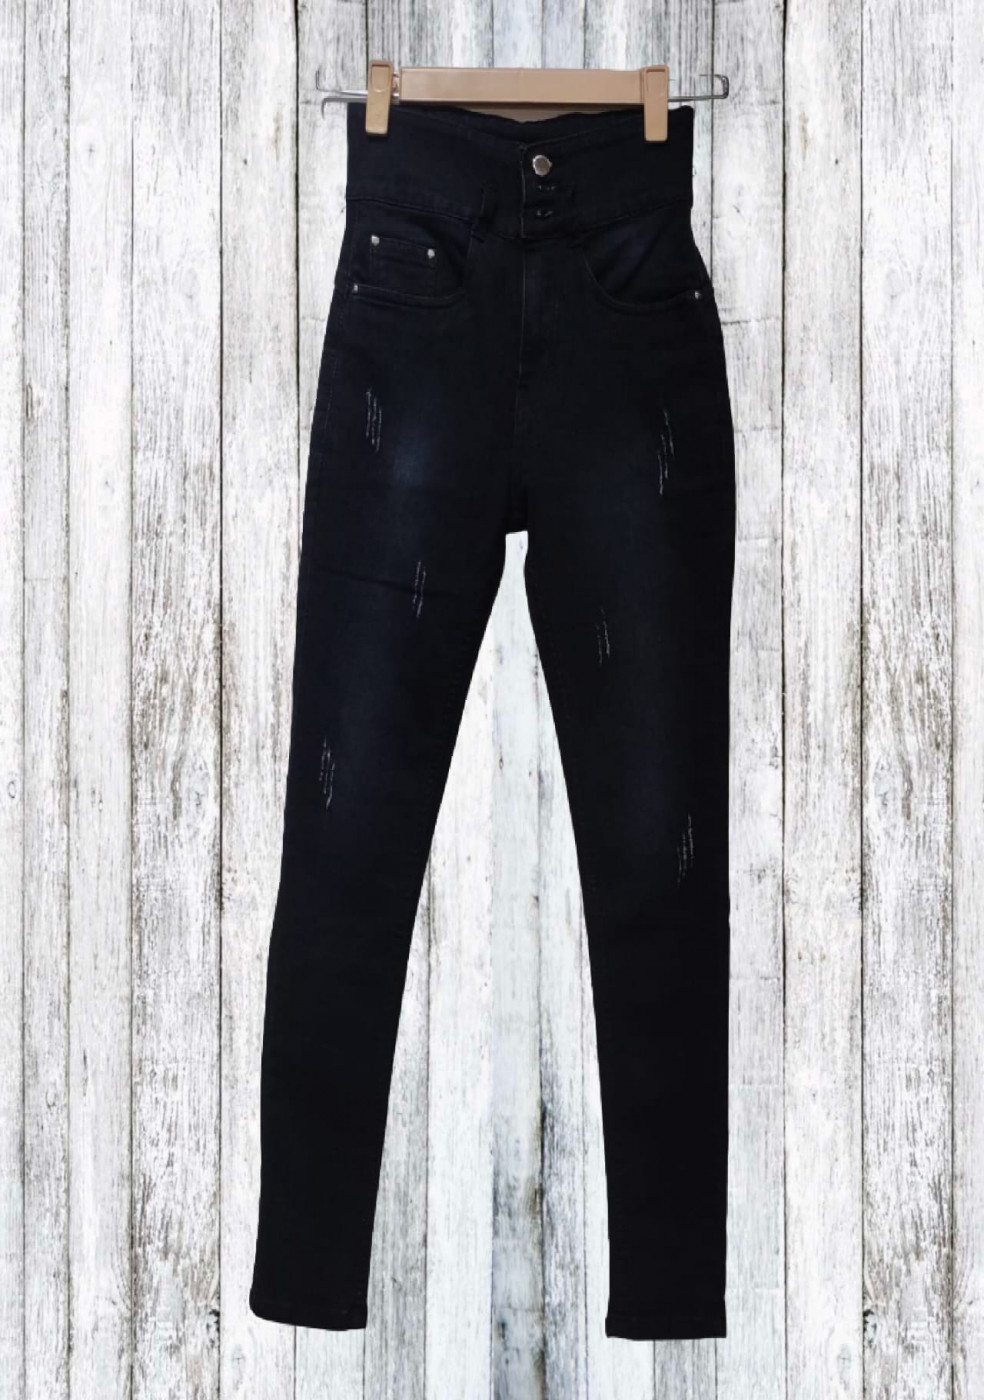 Black Stretchable Cotton Jeans For Women